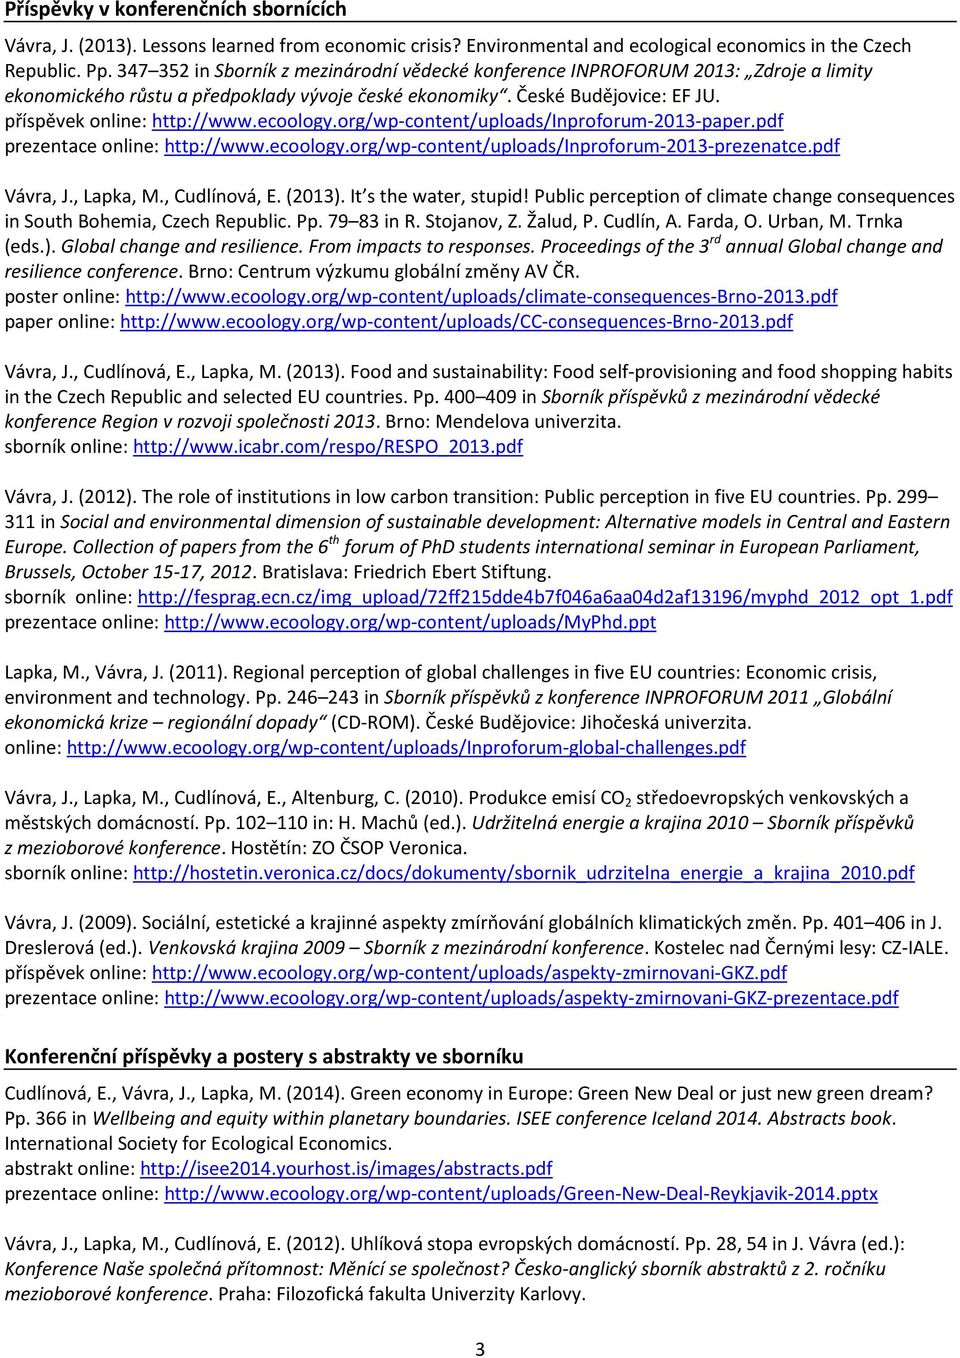 ecoology.org/wp-content/uploads/inproforum-2013-paper.pdf prezentace online: http://www.ecoology.org/wp-content/uploads/inproforum-2013-prezenatce.pdf Vávra, J., Lapka, M., Cudlínová, E. (2013).